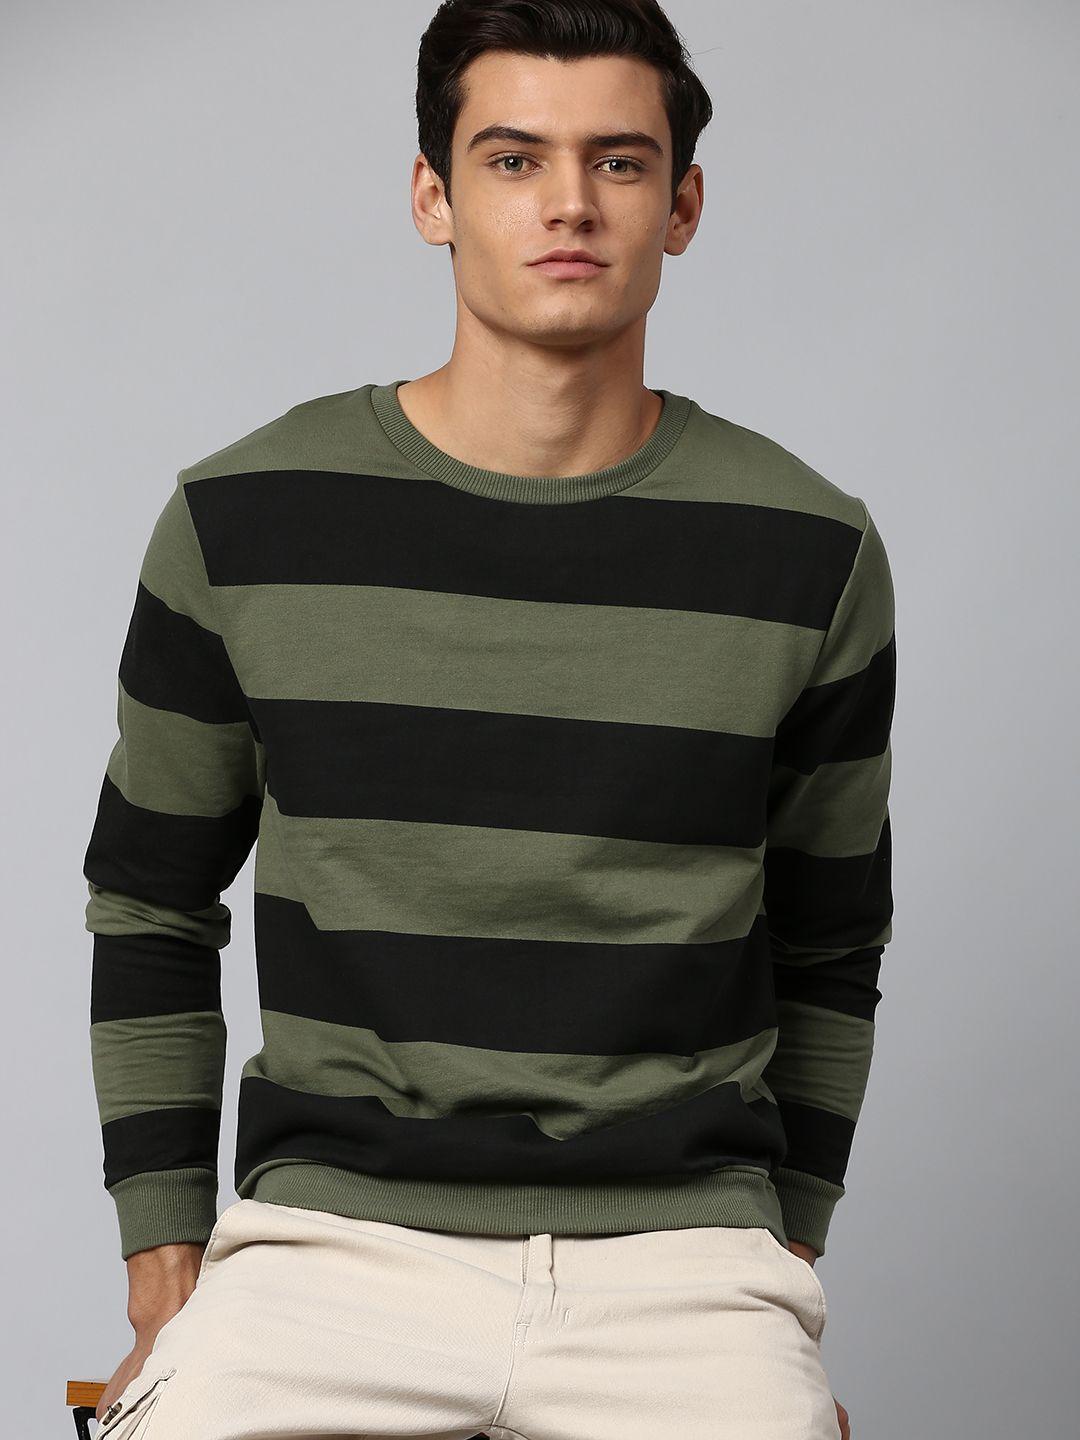 dennis-lingo-men-olive-green-and-black-striped-sweatshirt